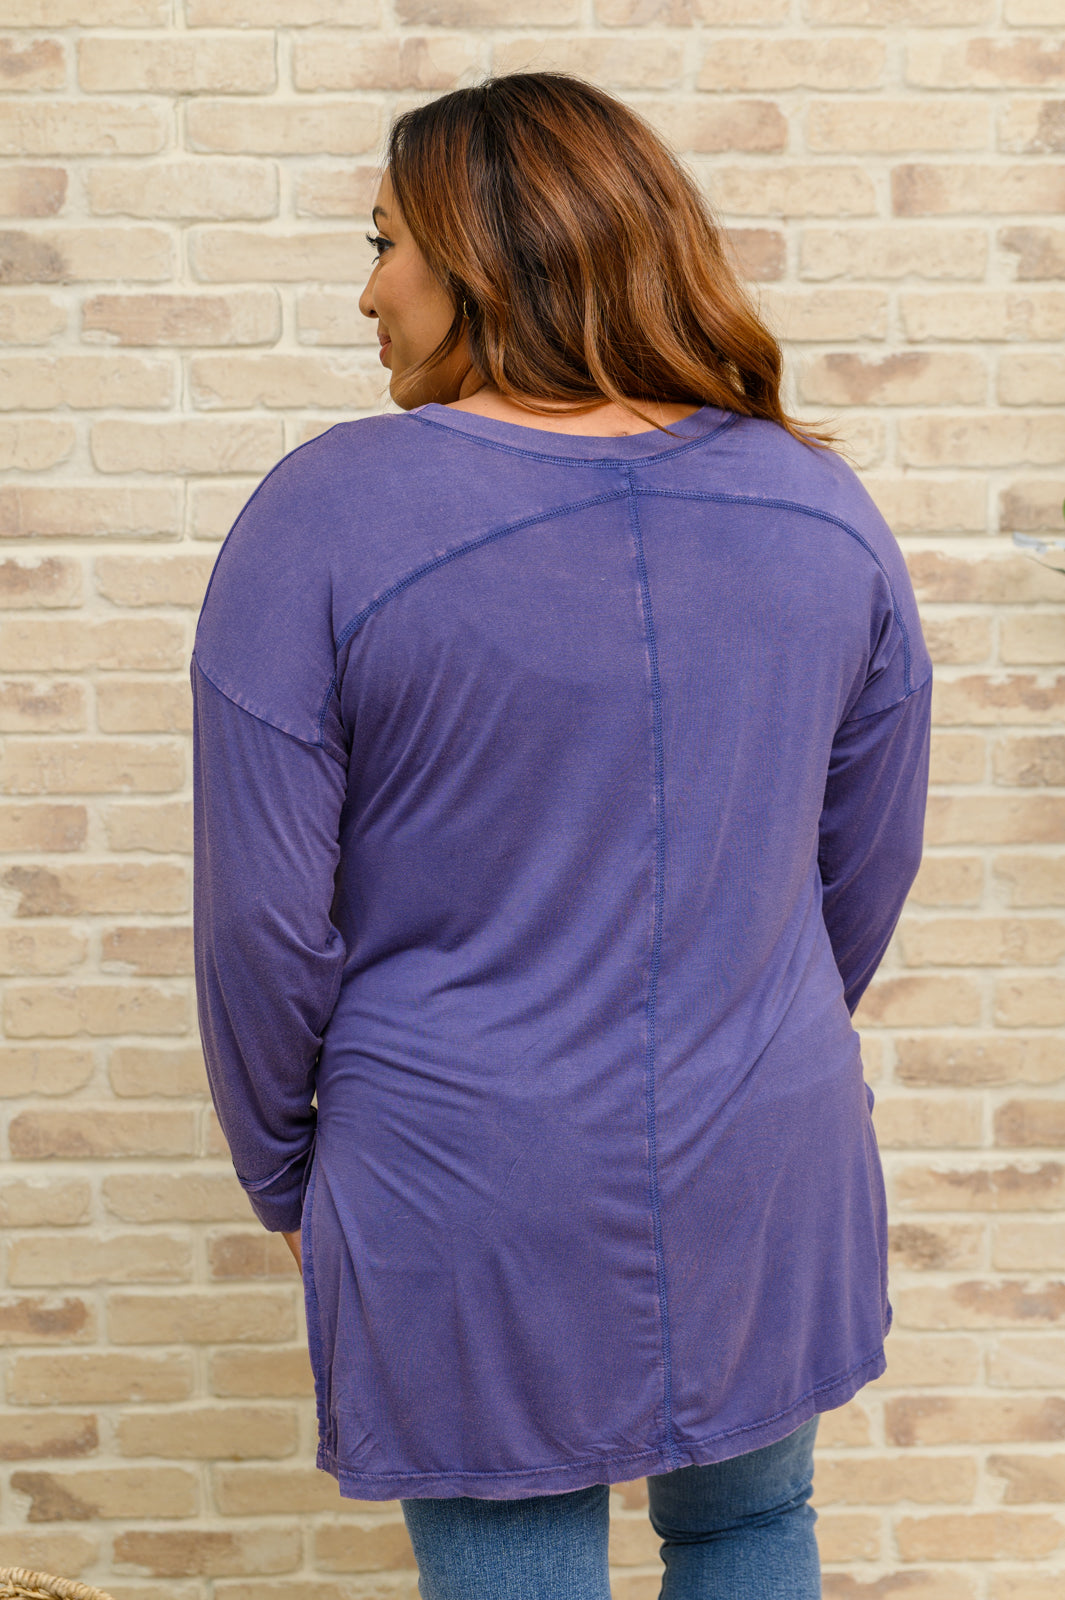 Long Sleeve Knit Top With Pocket In Denim Blue - FamFancy Boutique